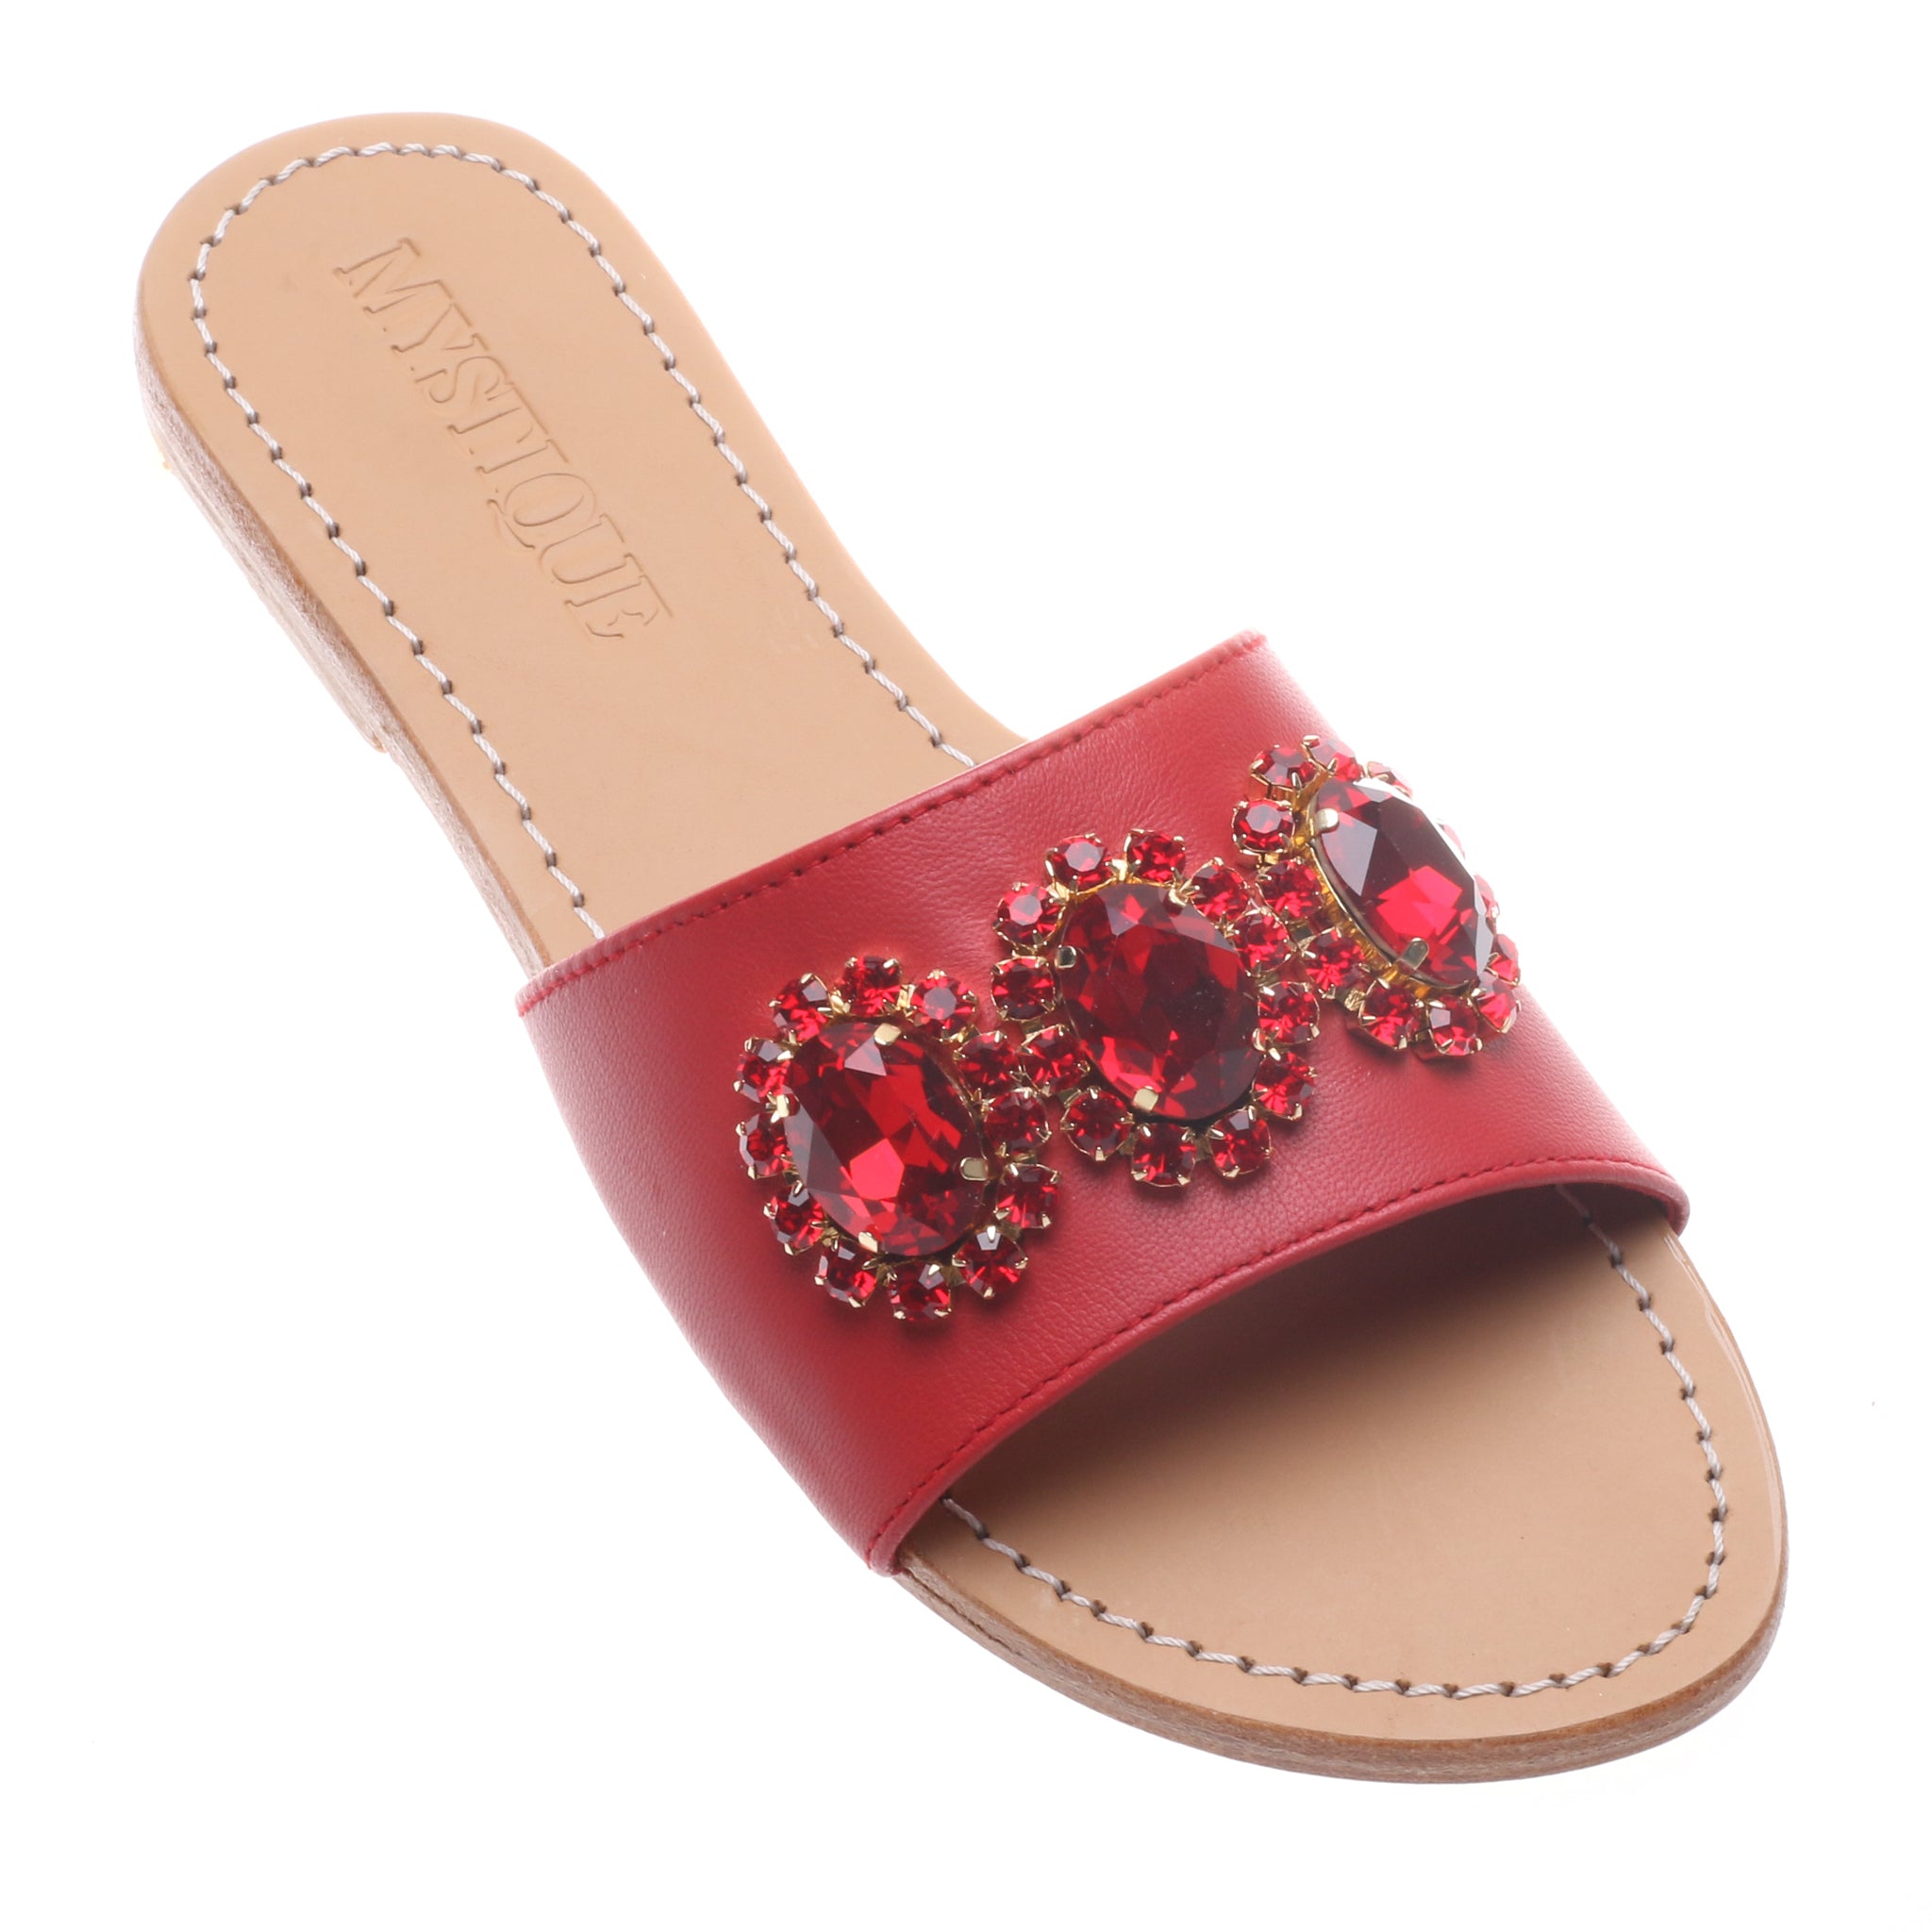 Women's Handmade Leather Sandals | Mystique Sandals